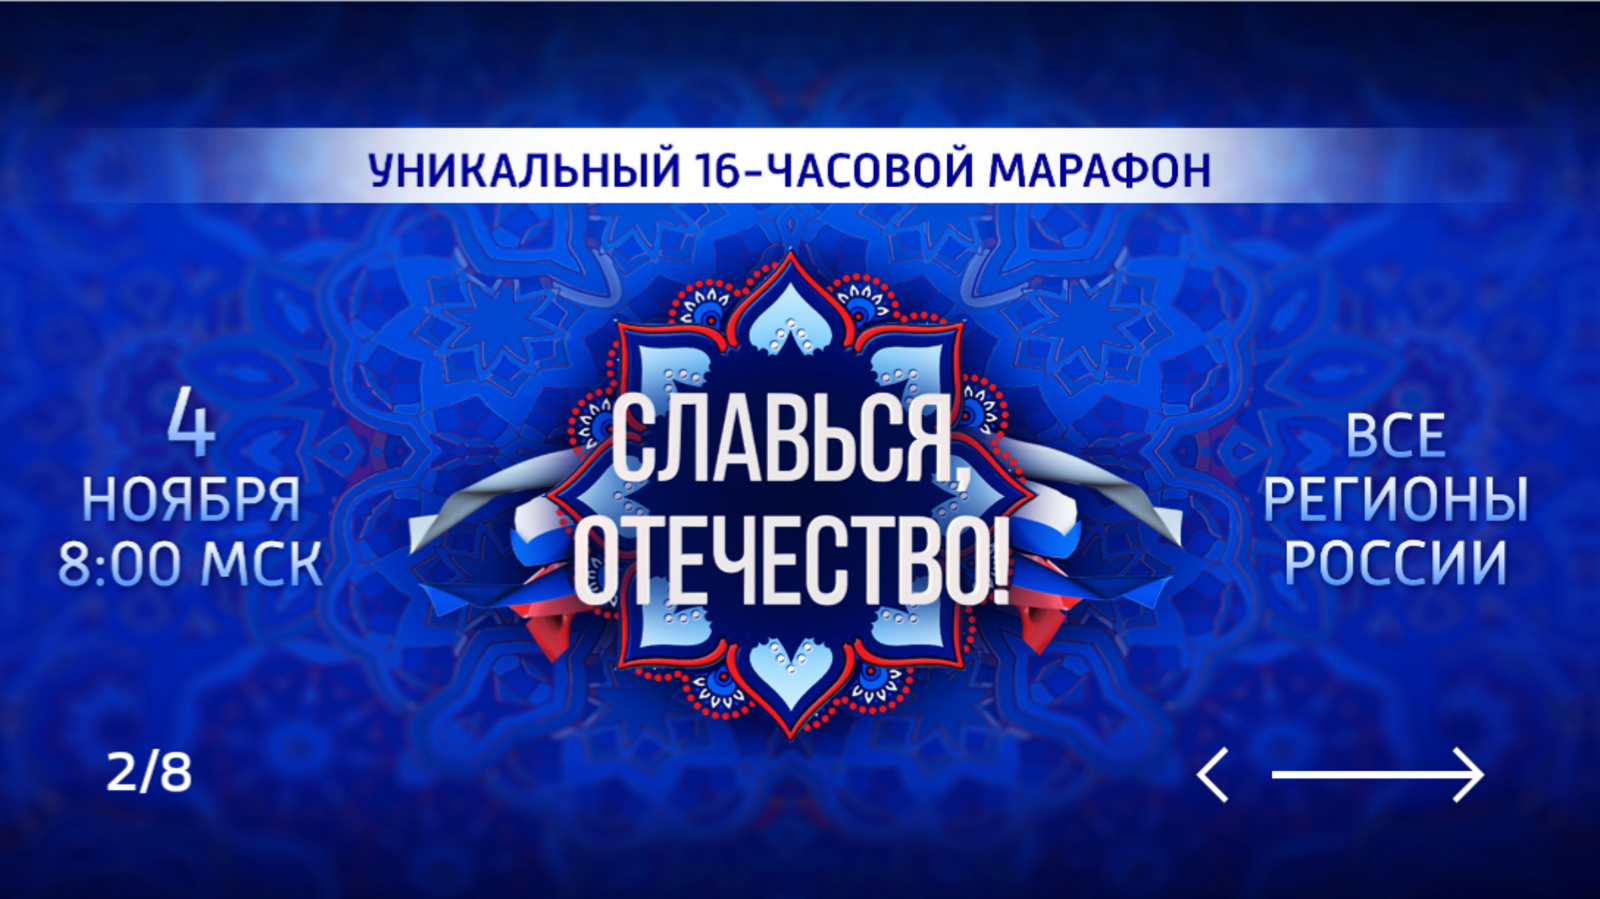 "Славься, Отечество!" бөтенрусия онлайн-марафонын карагыз!